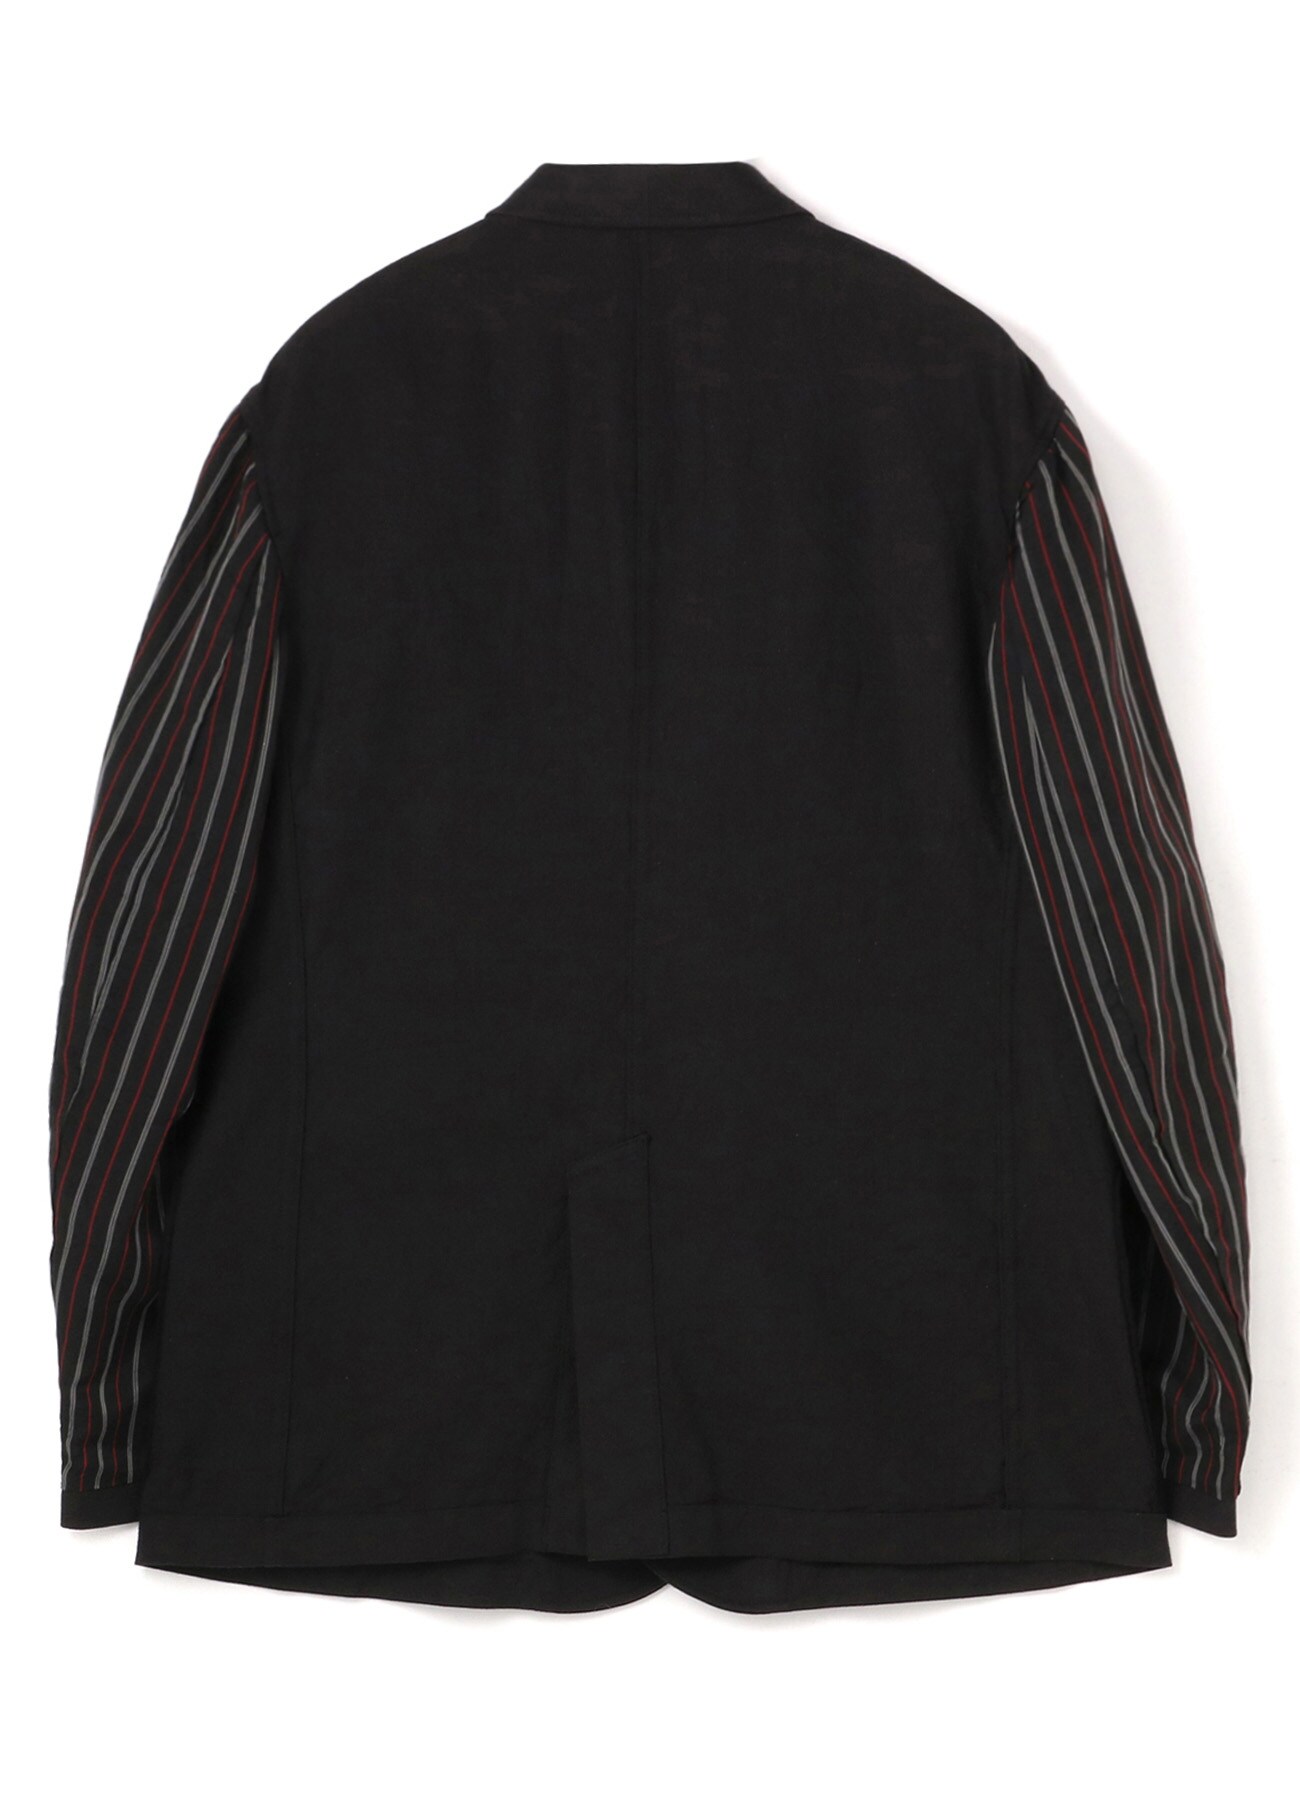 Li/C Herringbone Washer Twill Inside Out Reversible 2BS Jacket